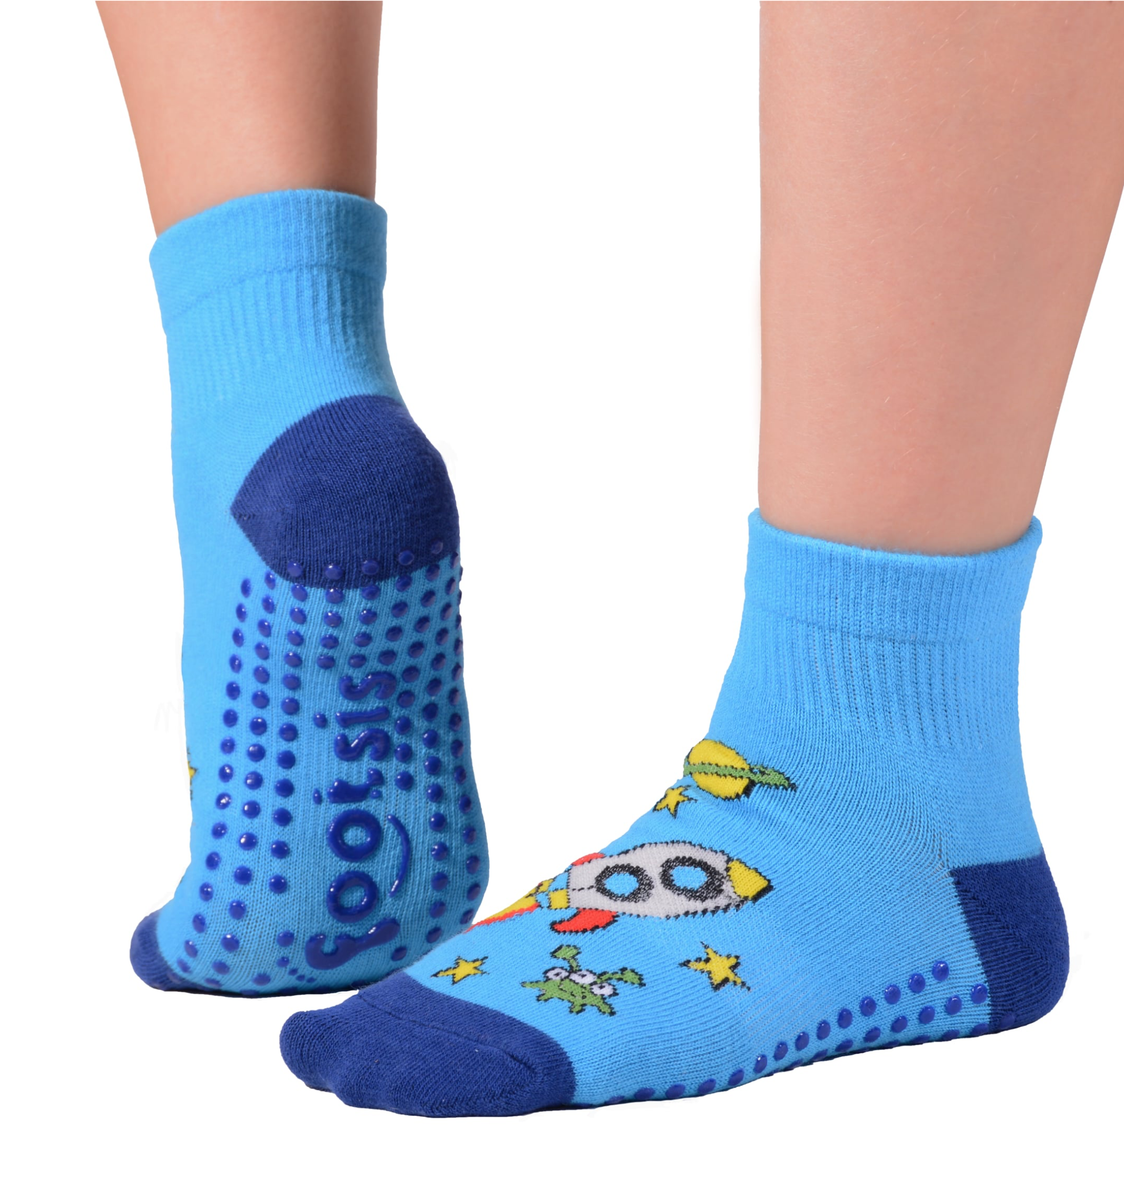 FOOTSIS Non Slip Grip Socks for Yoga, Pilates, Barre, Home, Hospital ,Mommy  and Me classes Unicorn